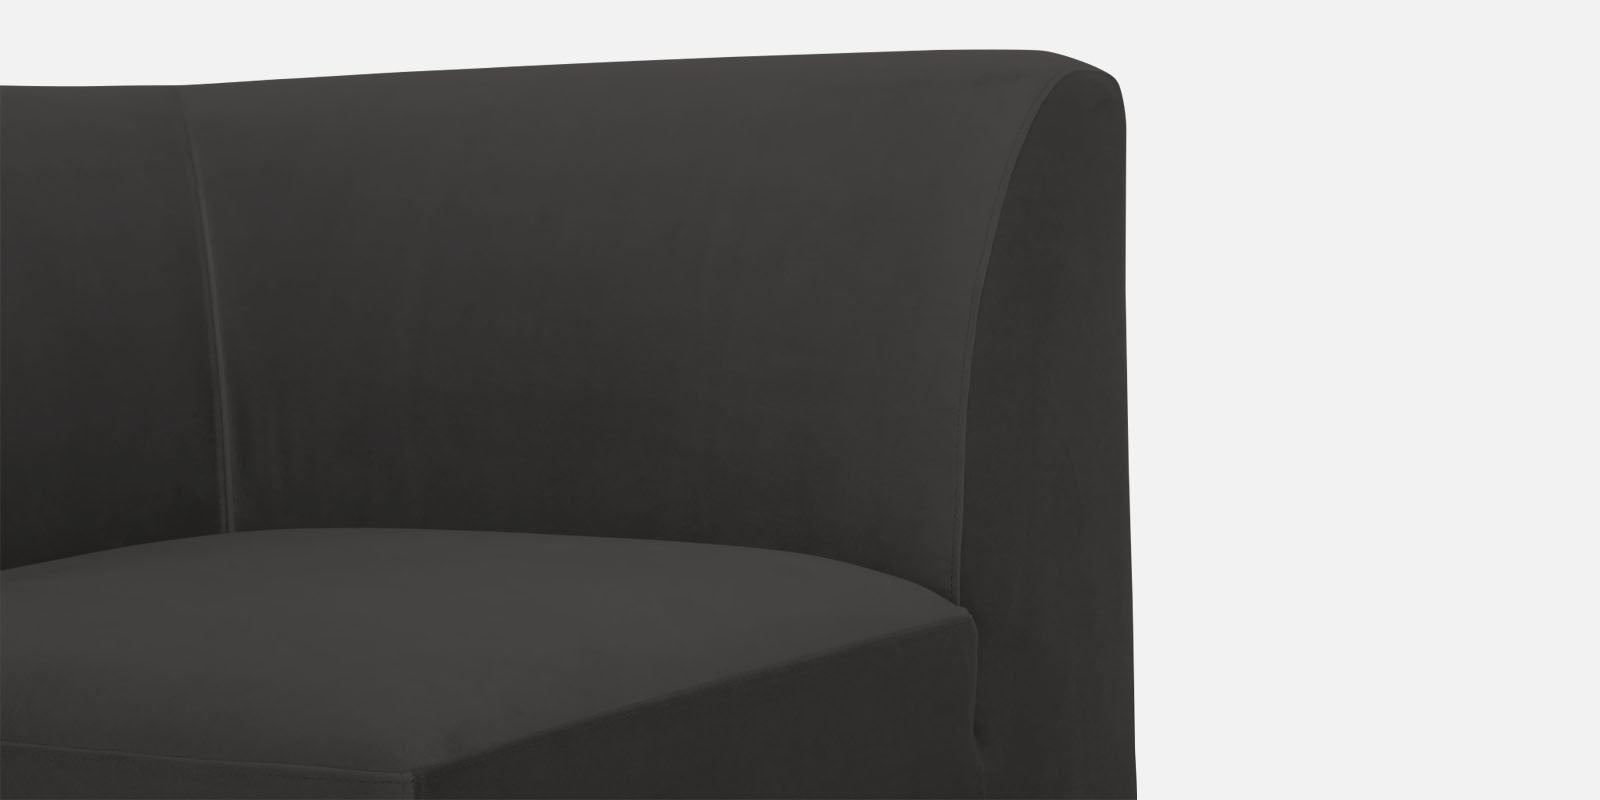 Bufa Velvet RHS Sectional Sofa In Hory Grey Colour With Ottoman